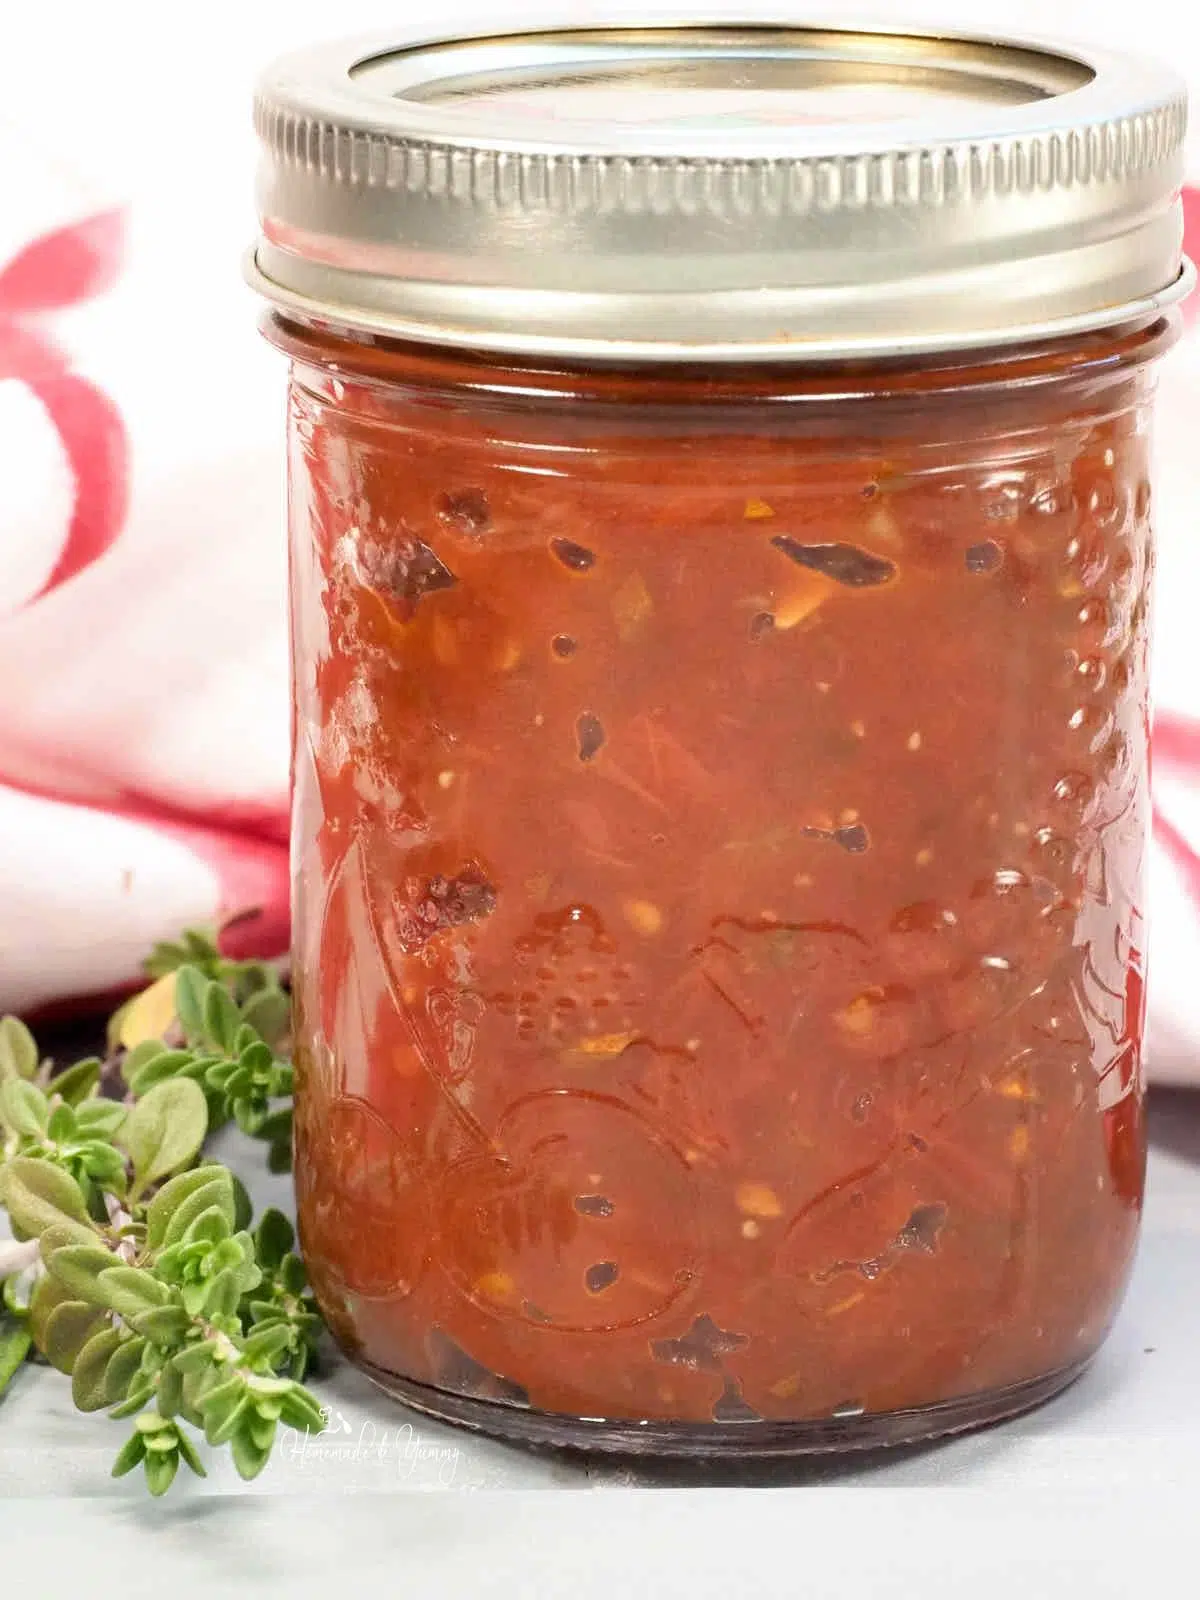 A jar of fresh tomato jam ready to eat.